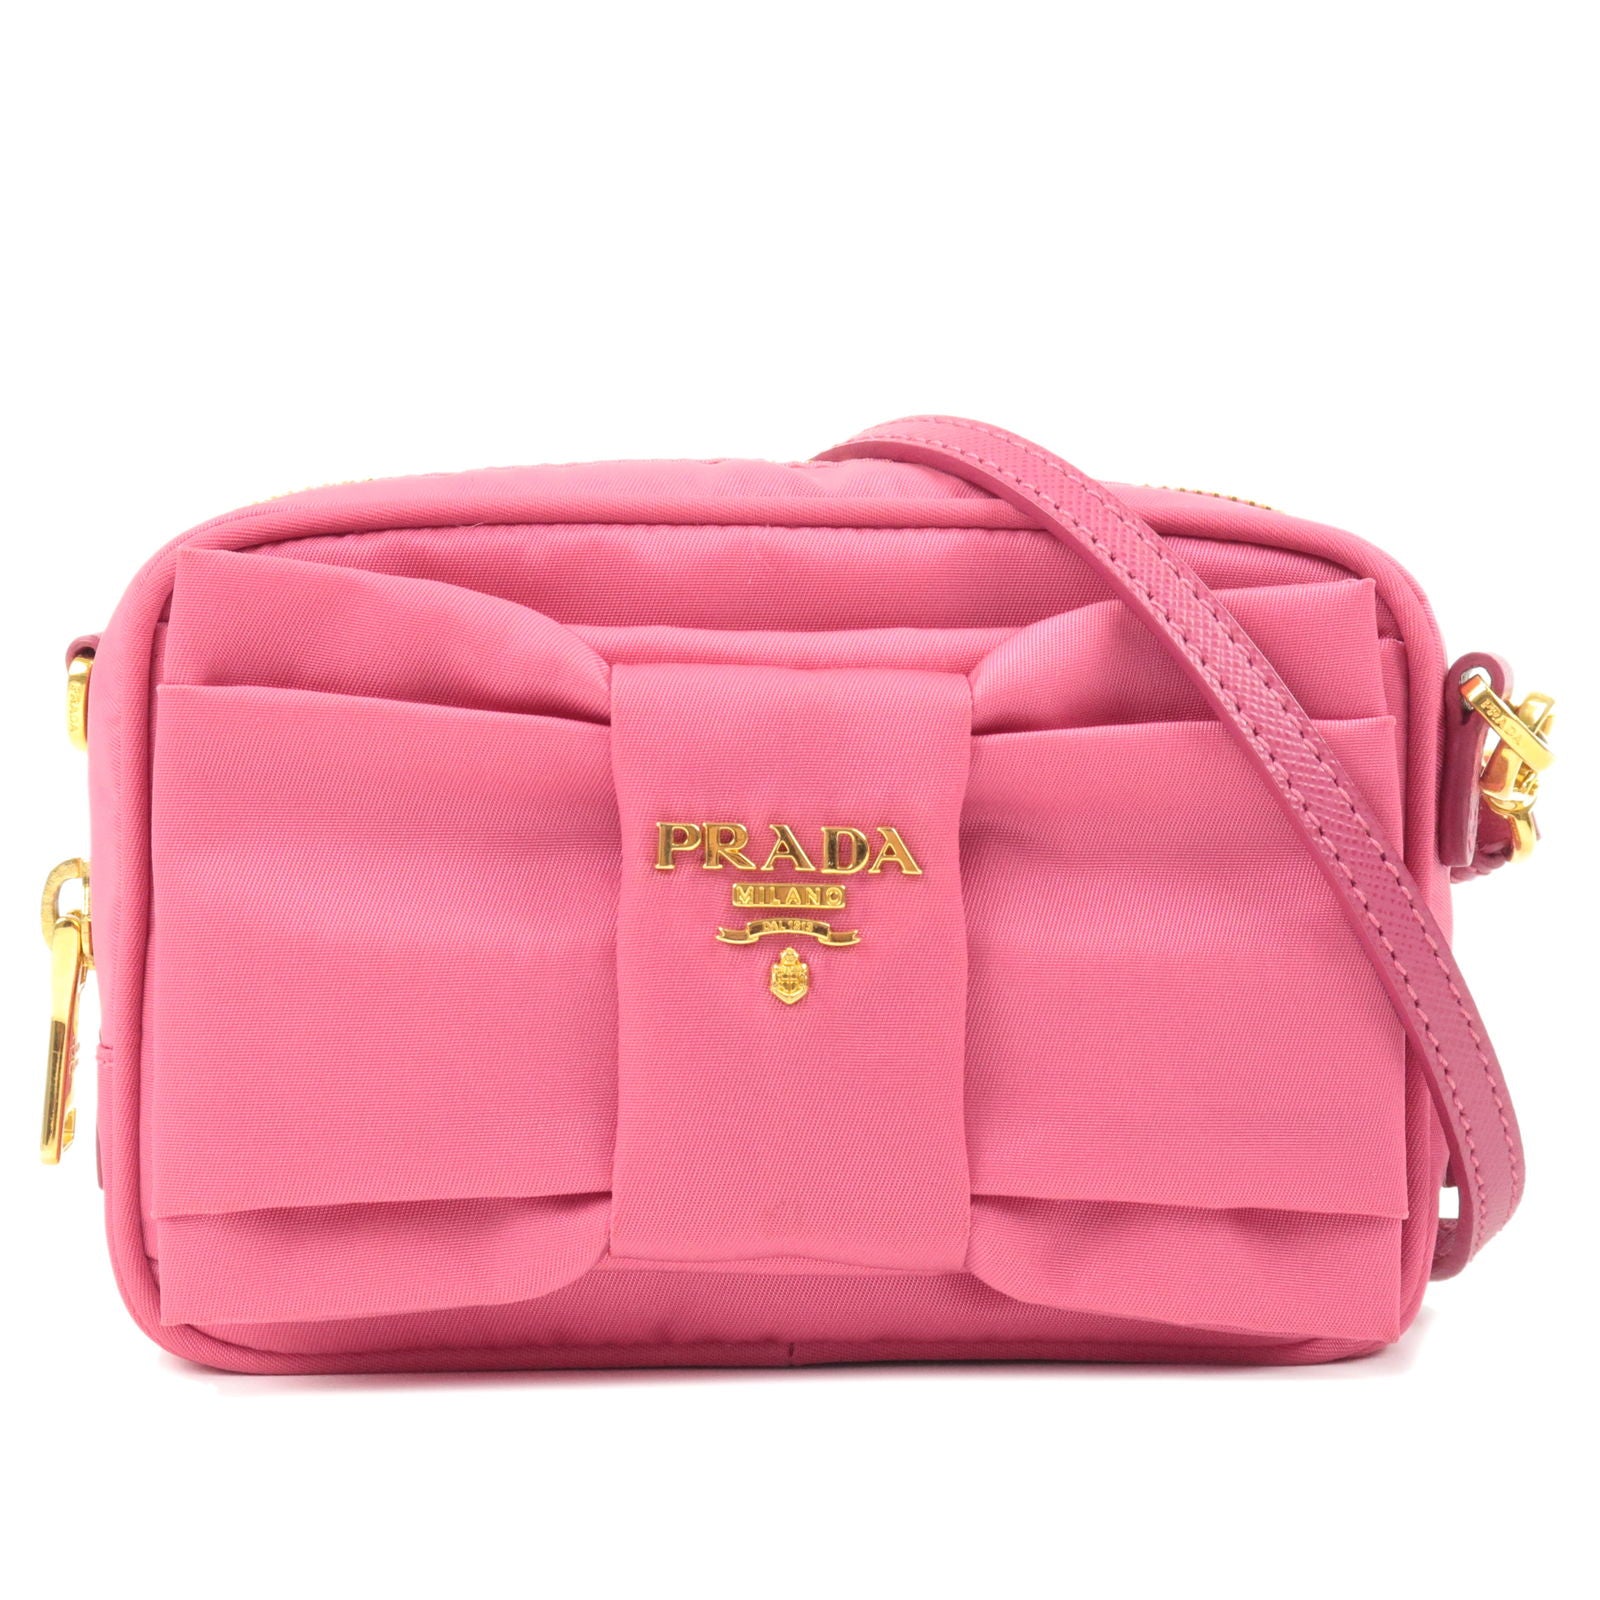 PRADA-Logo-Nylon-Leather-Ribbon-Shoulder-Bag-Pink-1N1727